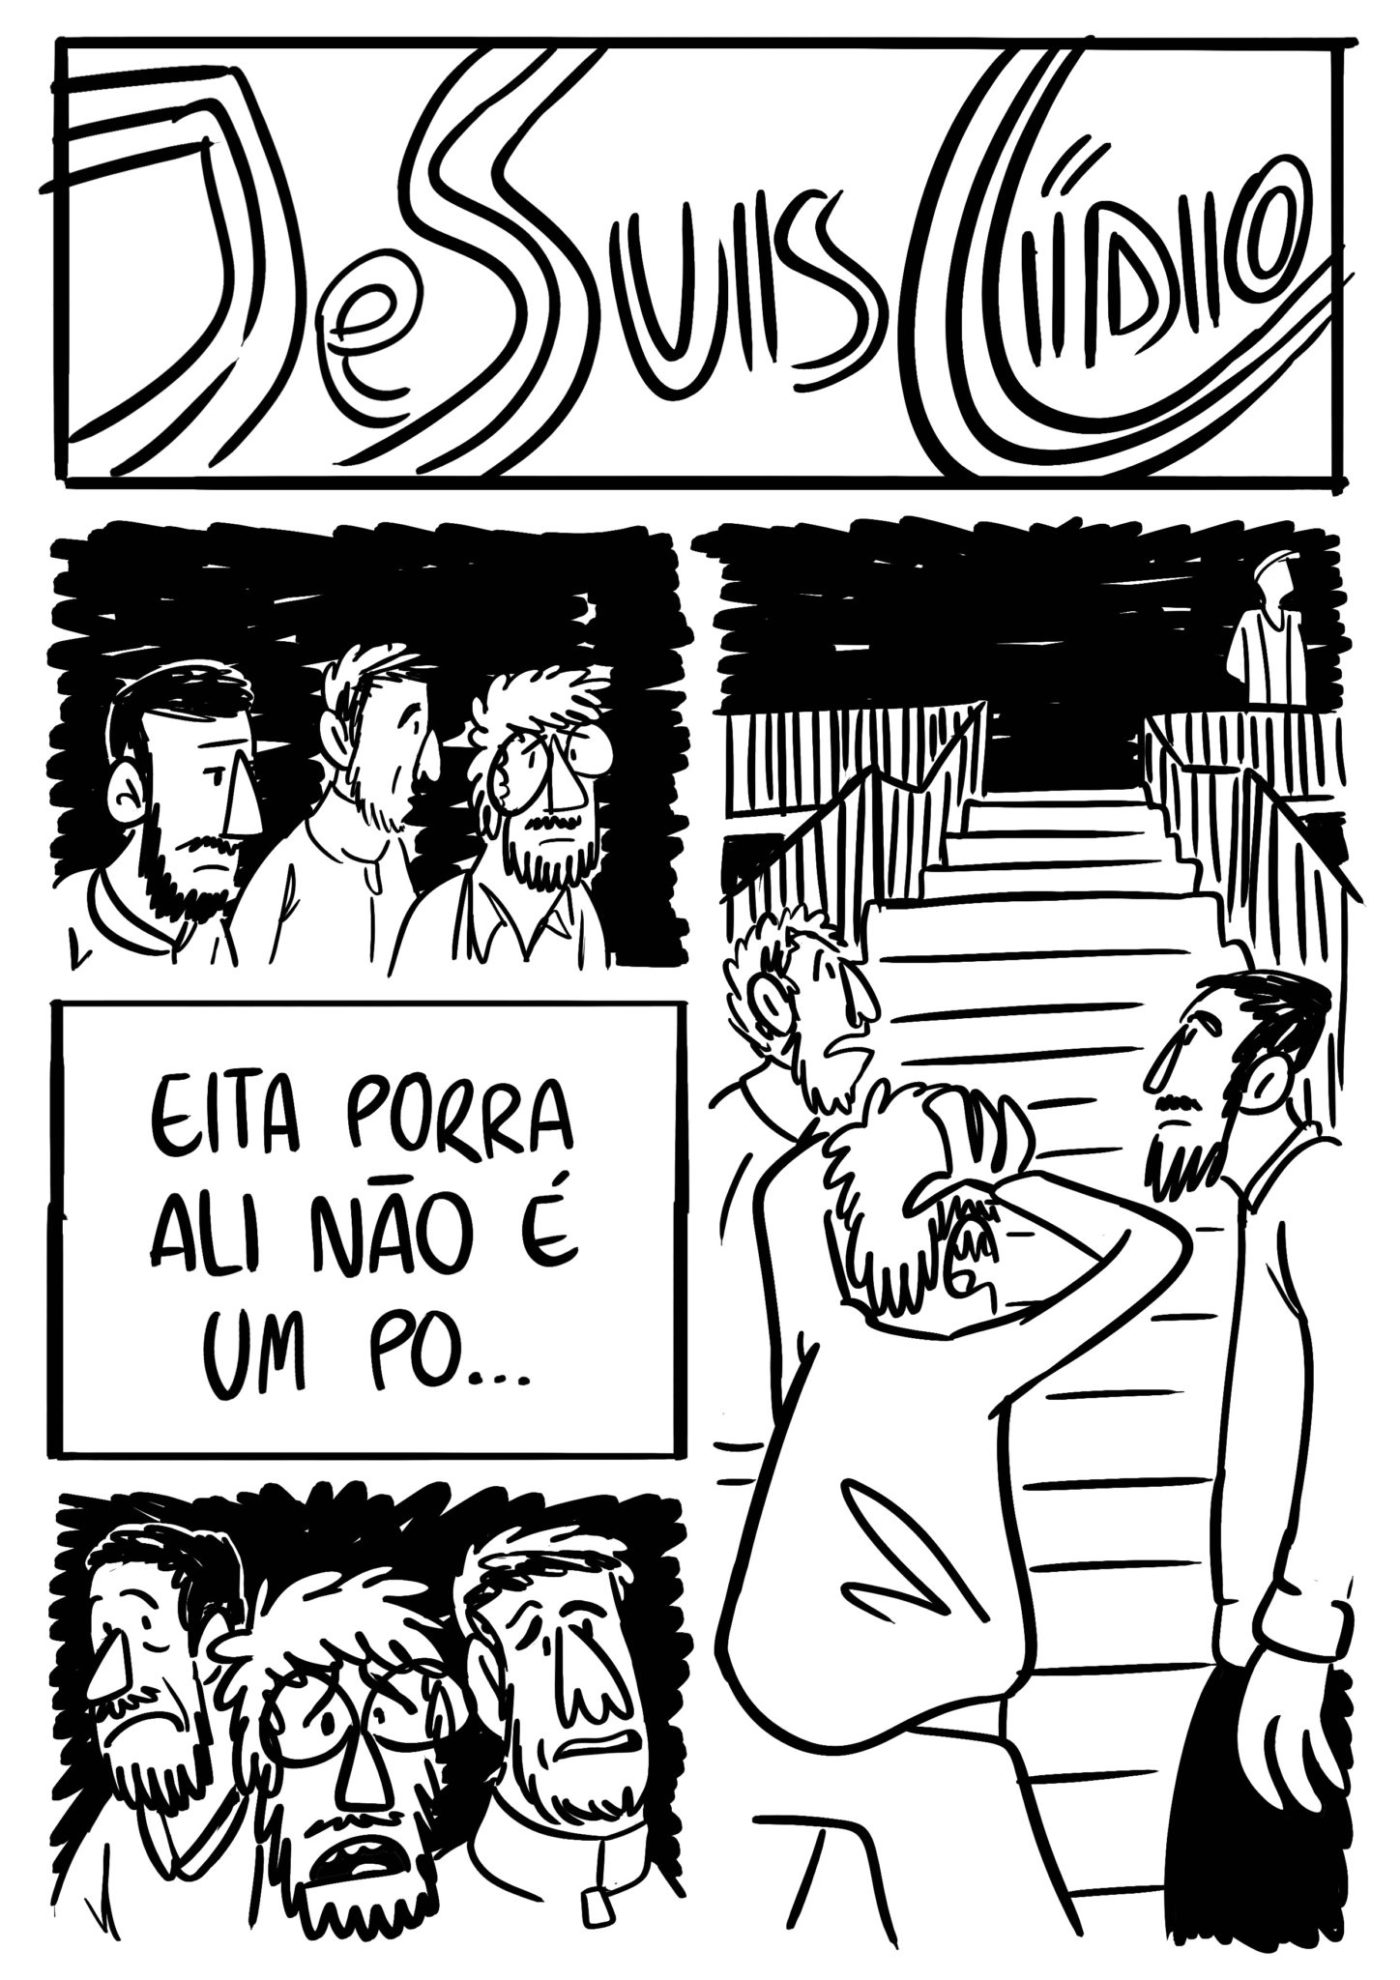 Je Suis Cídio #9, por João B. Godoi